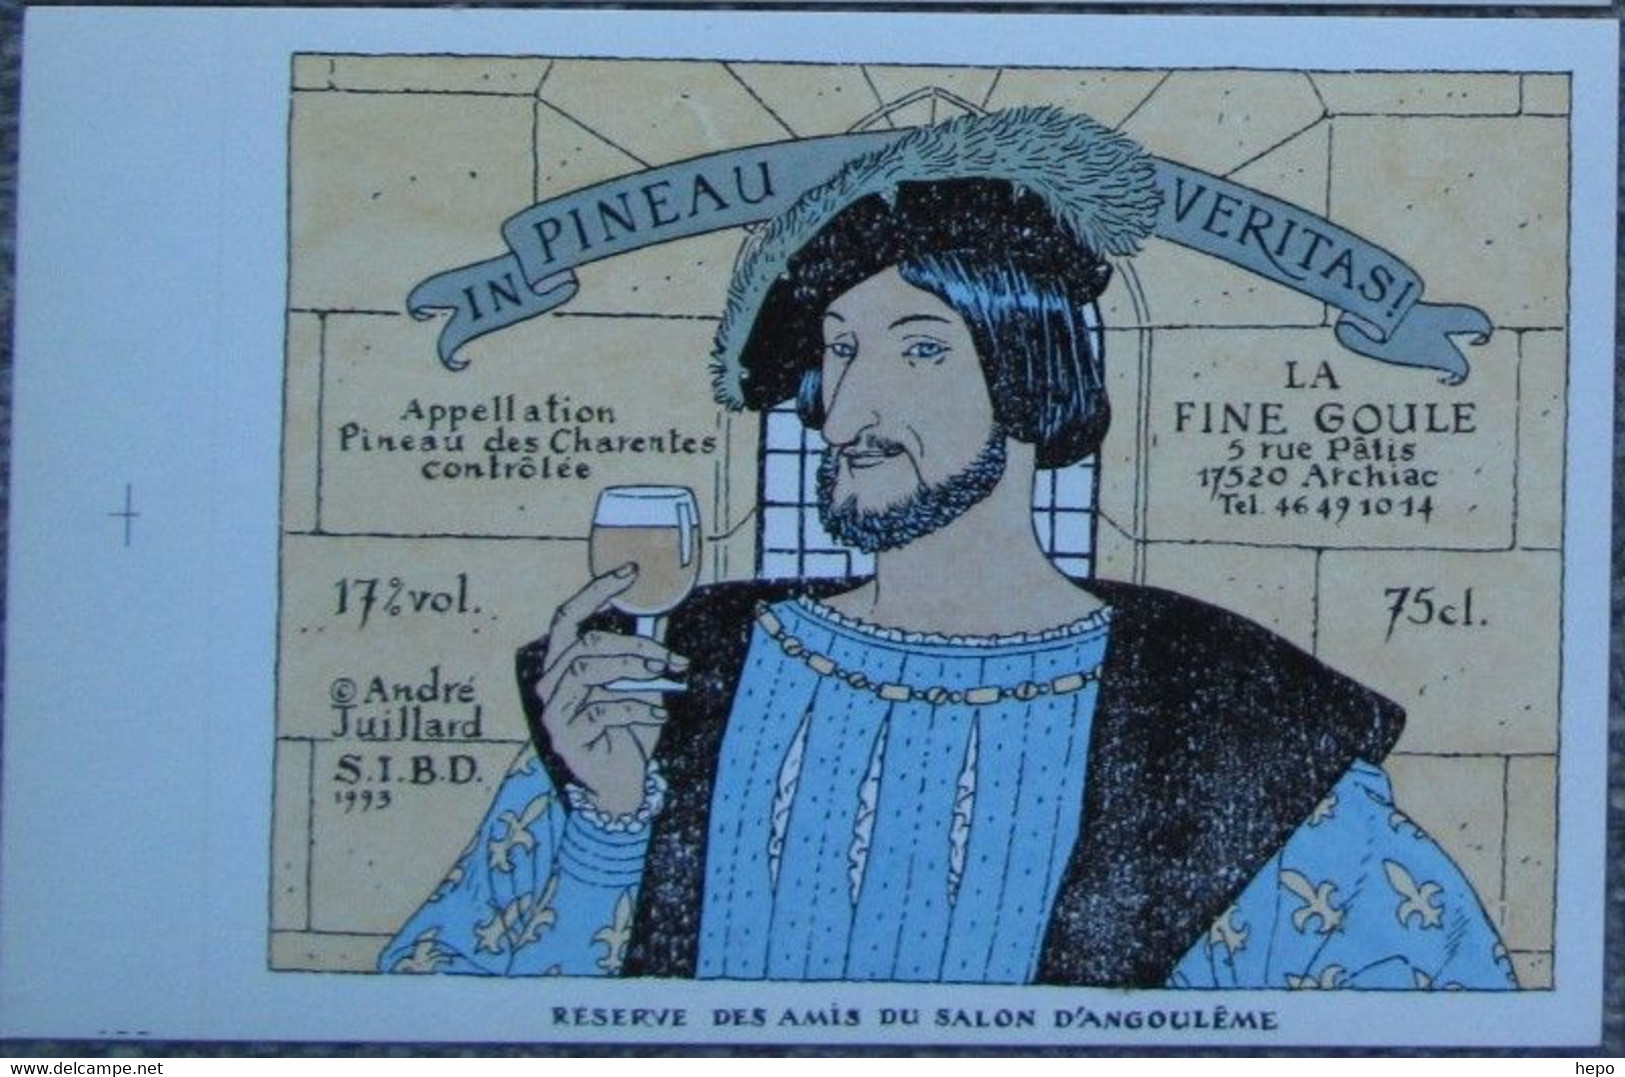 Juillard - In Pineau Veritas - Etiquette Vin 1993 Angouleme - Illustrators J - L